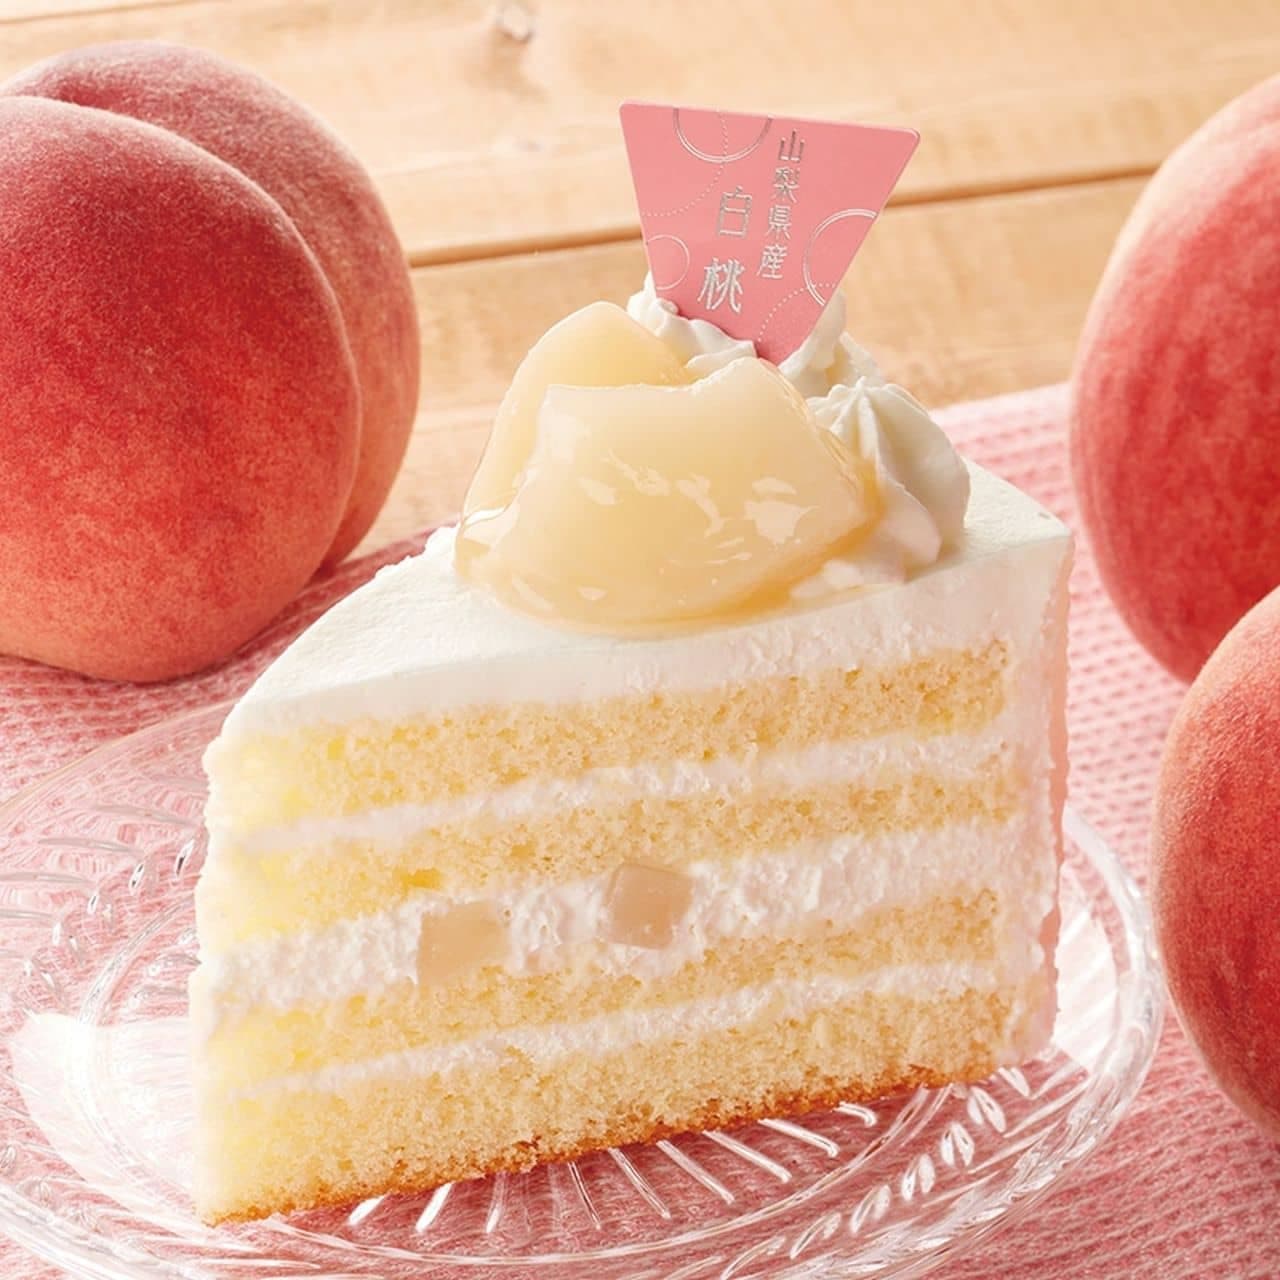 Chateraise "Premium Shortcake: Yamanashi White Peaches